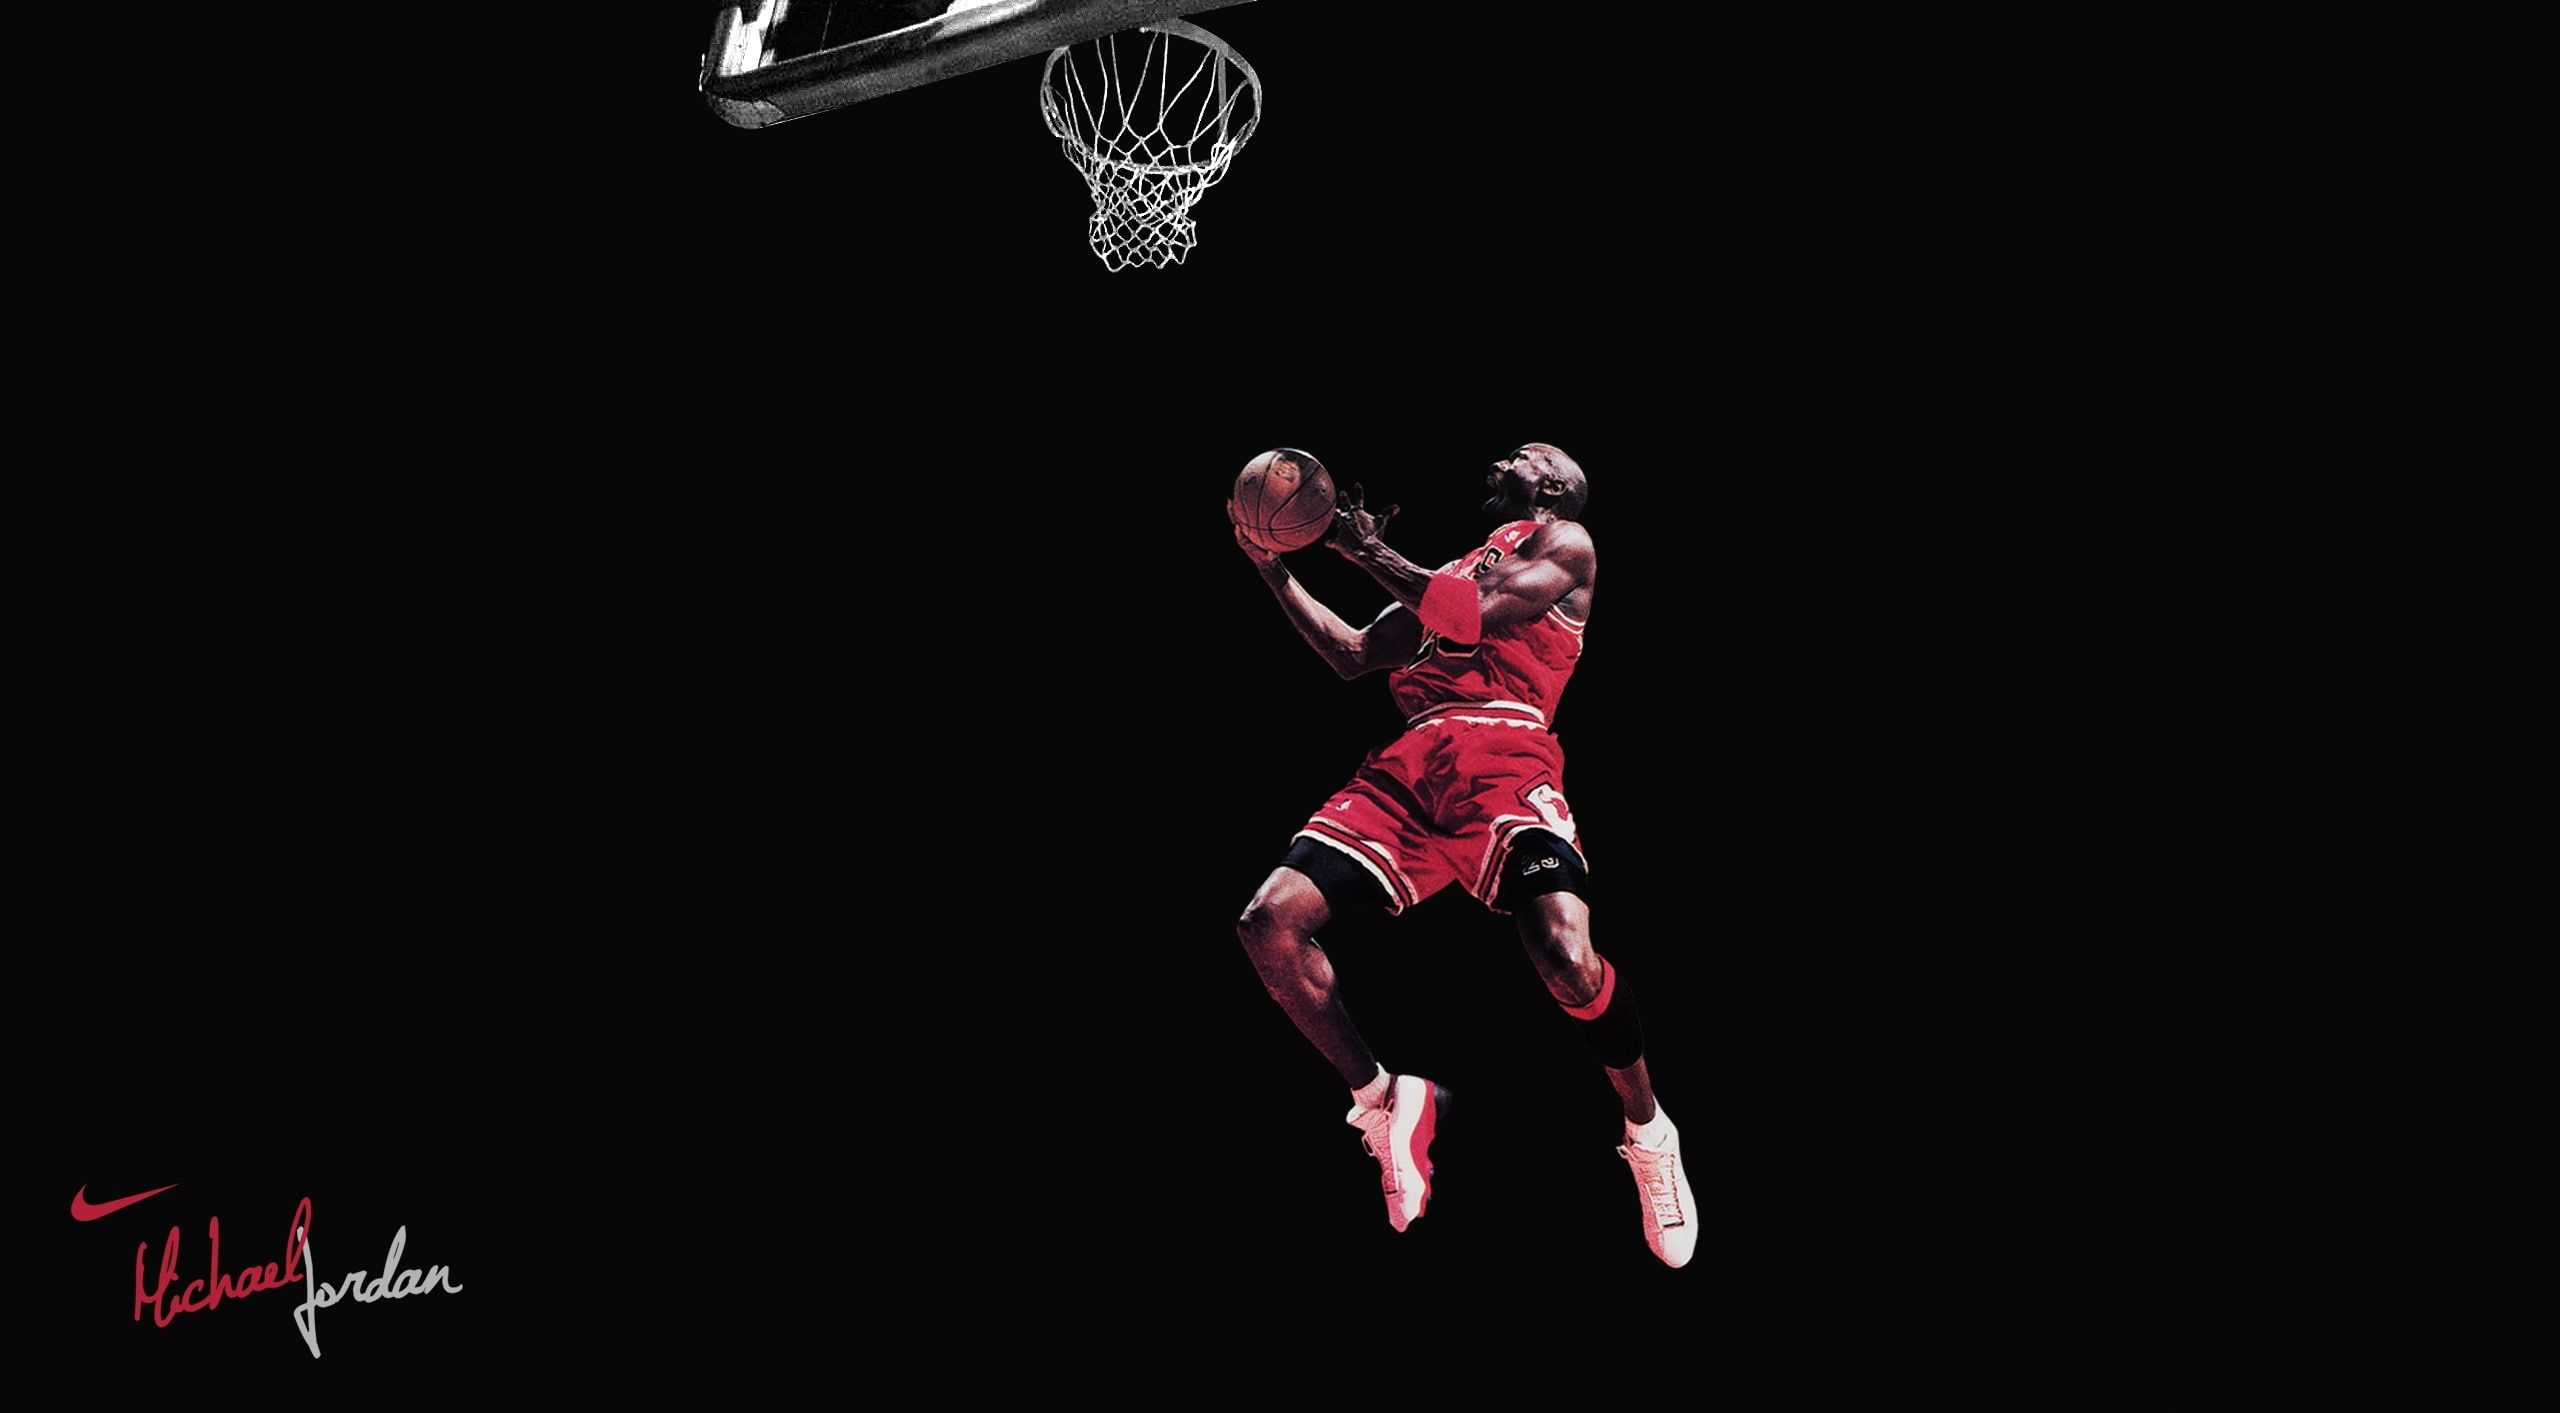 Michael Jordan Clean, Michael Jordan dunk wallpaper, Sports, Basketball wallpaper. Jordan background, Basketball wallpaper, Michael jordan